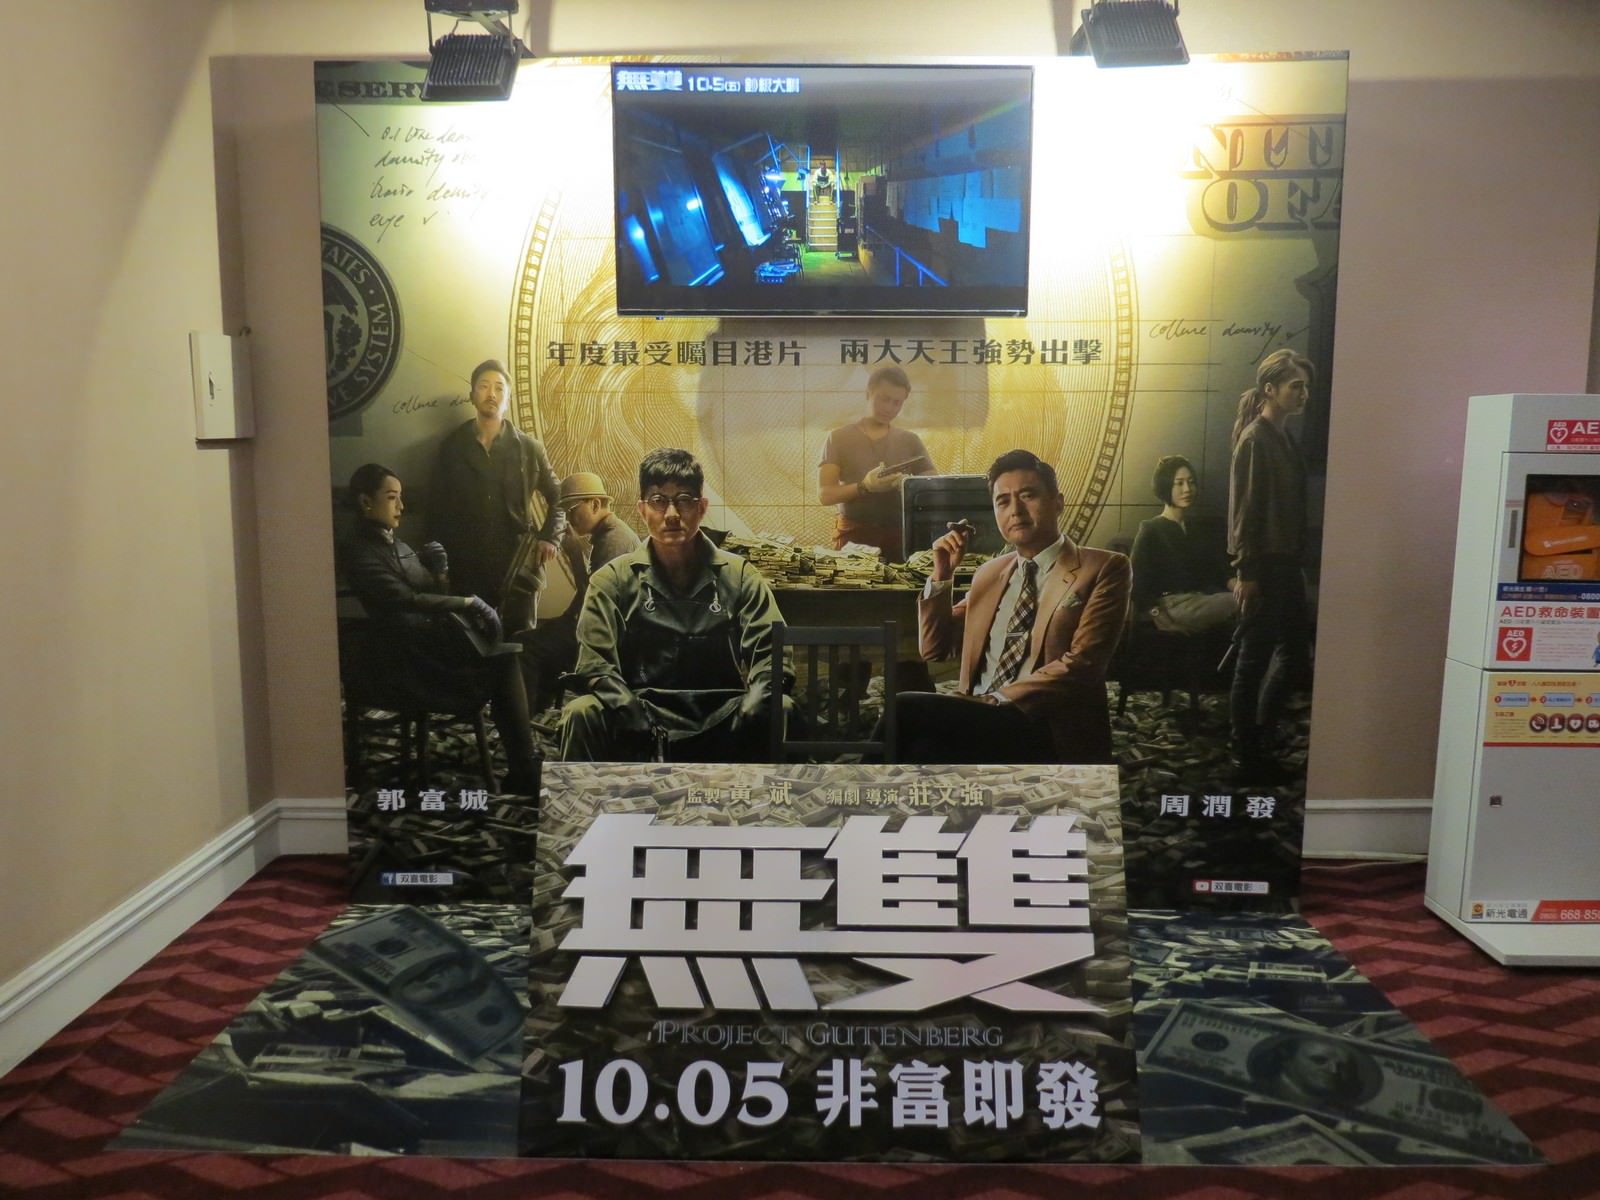 Movie, 無雙(中國.香港, 2018) / 無雙(台灣) / 无双(中國) / Project Gutenberg(英文), 廣告看板, 欣欣秀泰影城